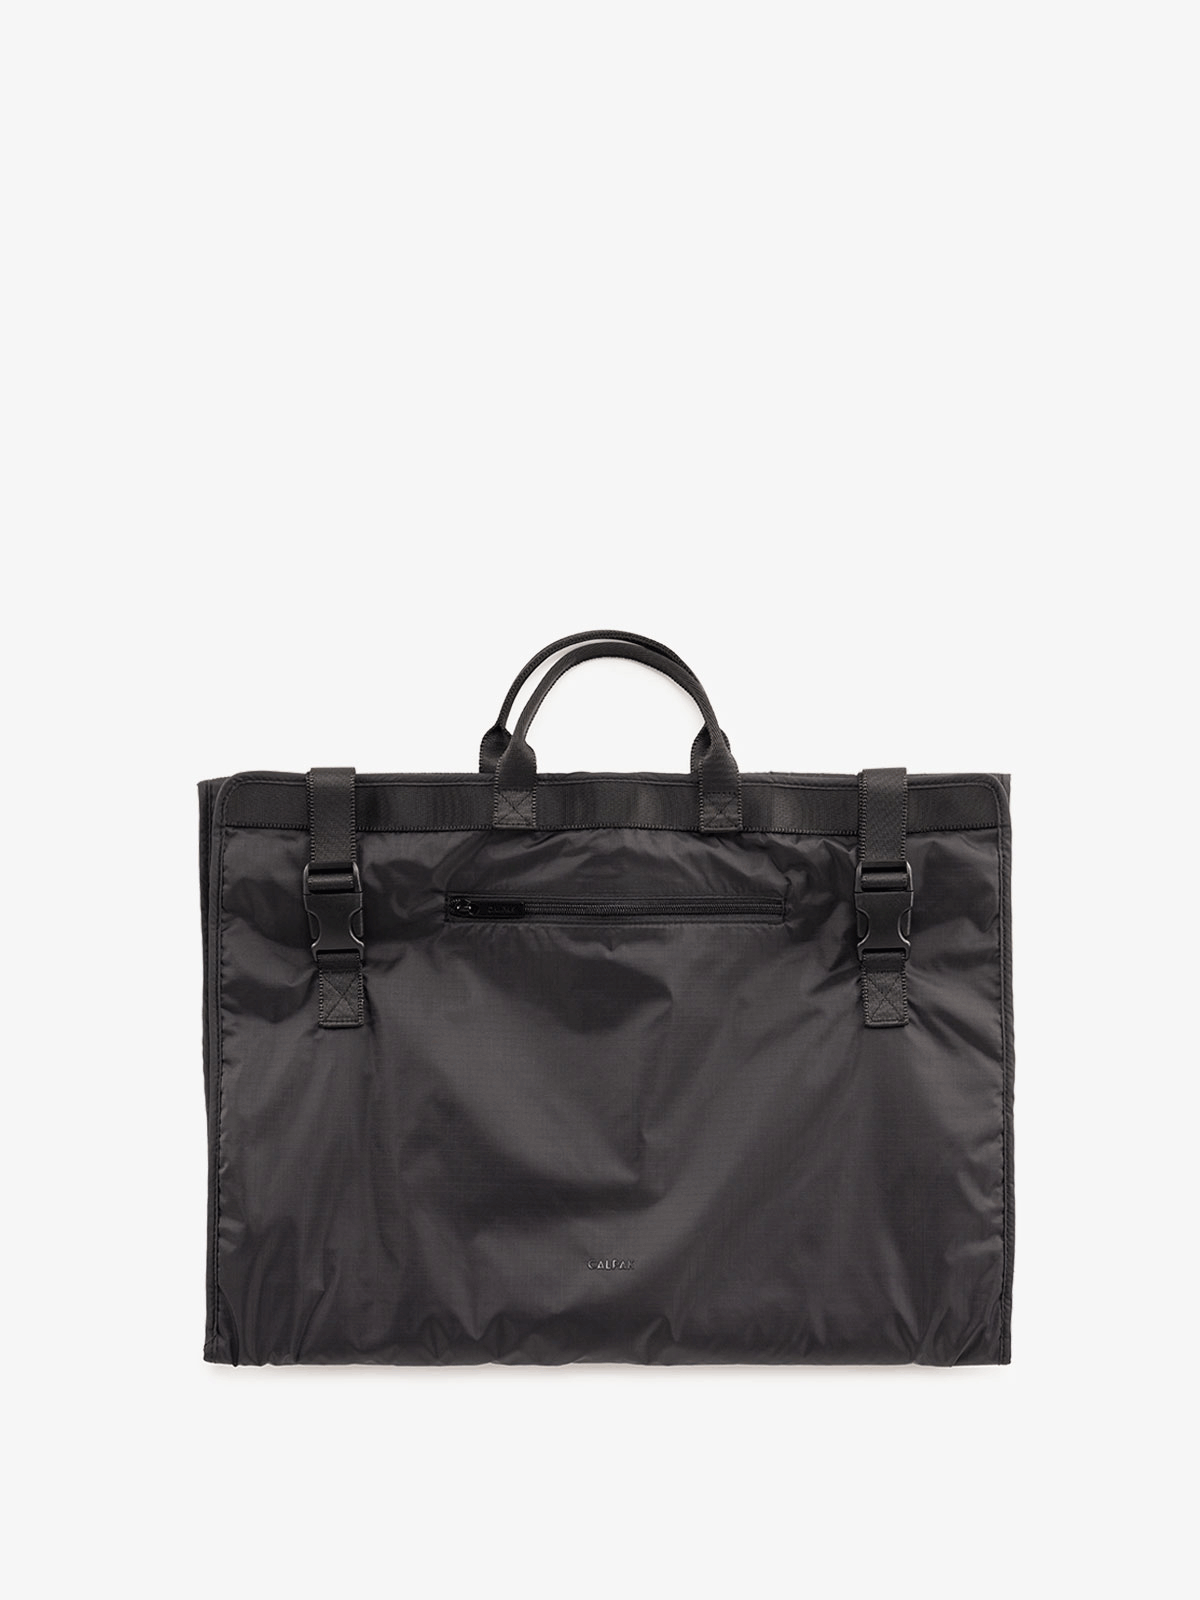 CALPAK foldable garment bag for storage with pockets in black